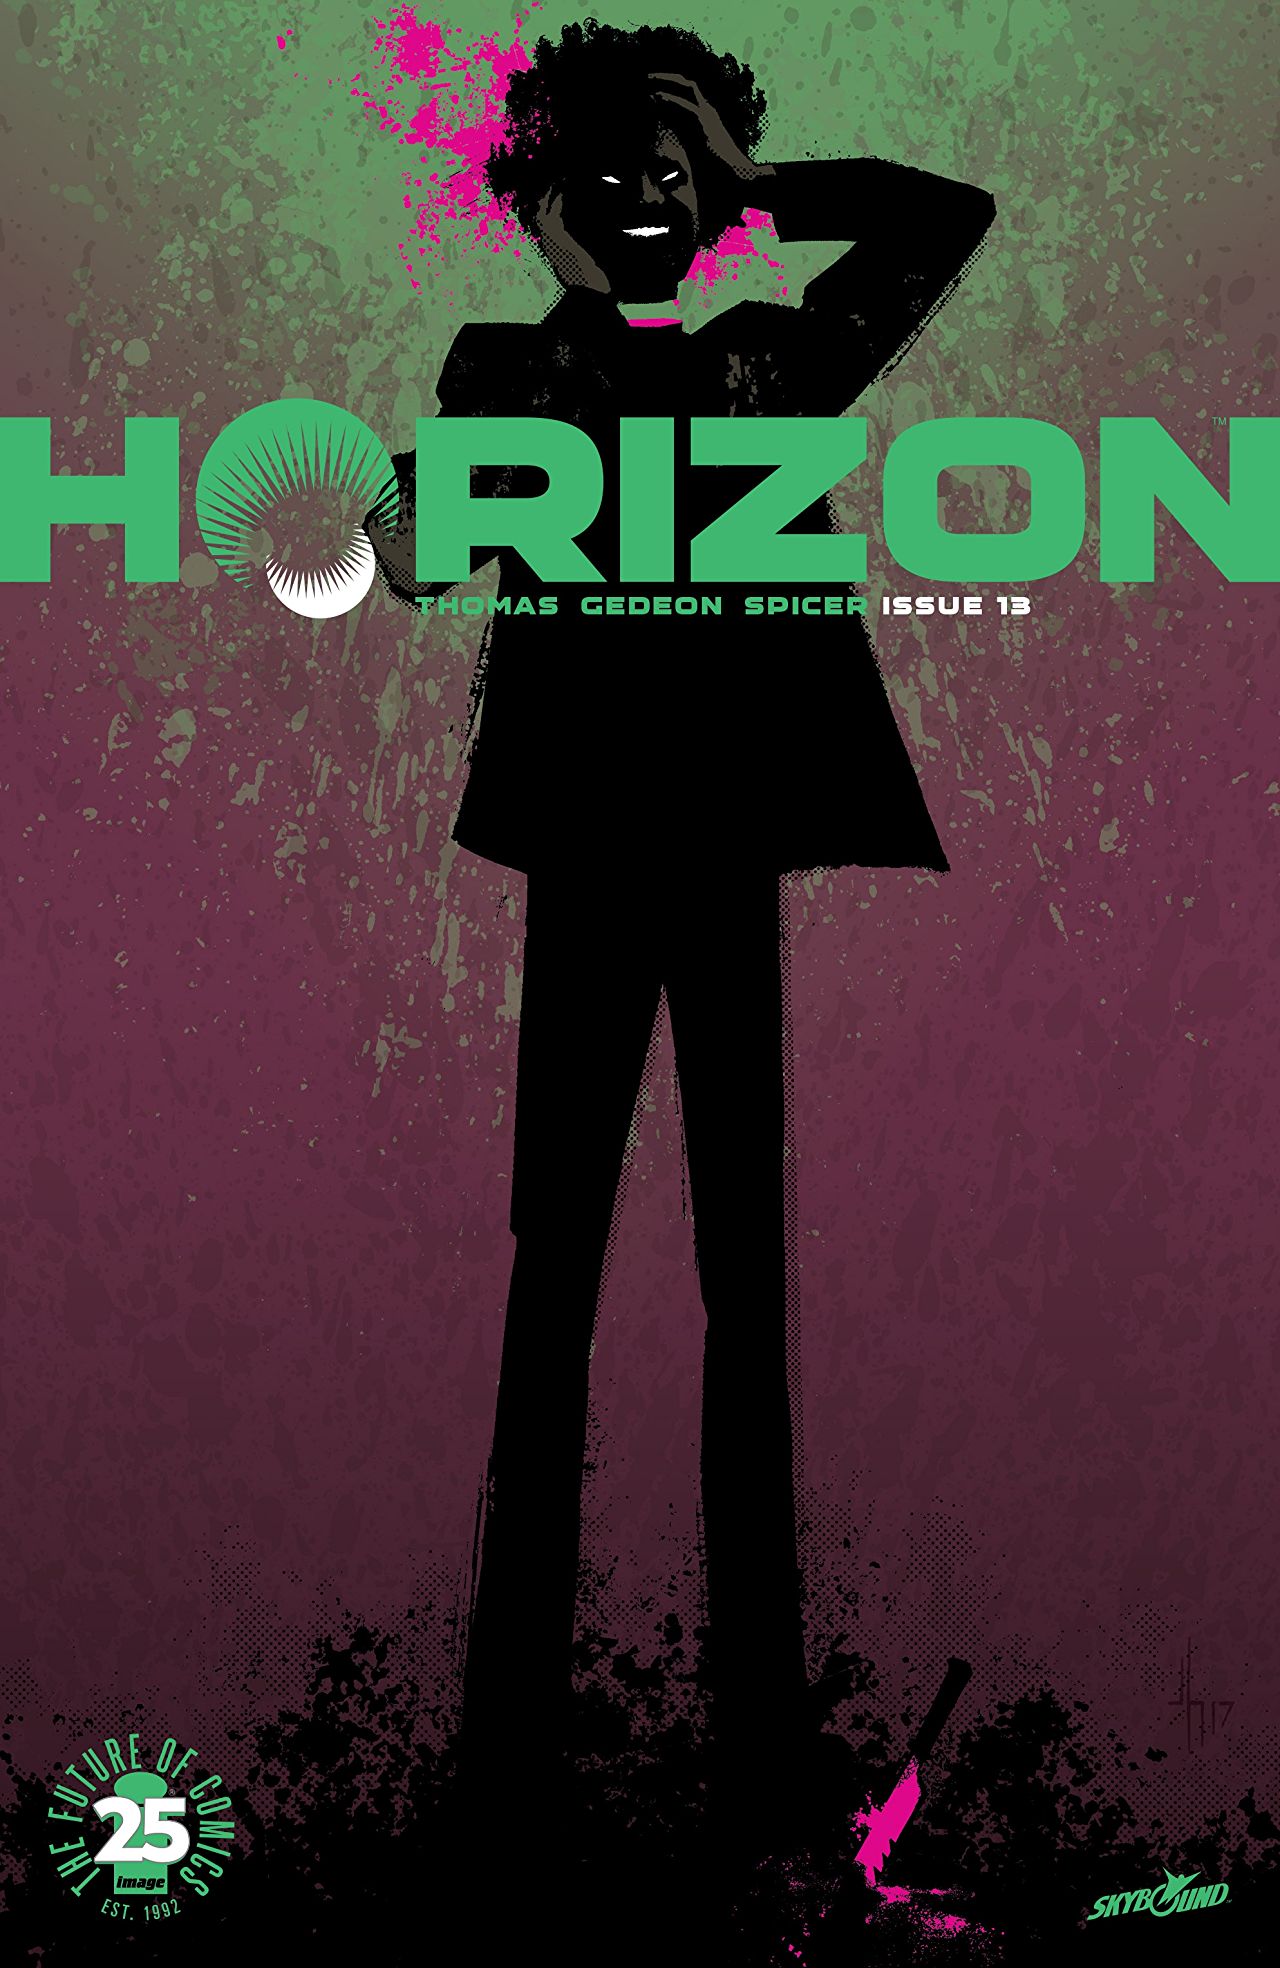 Horizon Issue 13